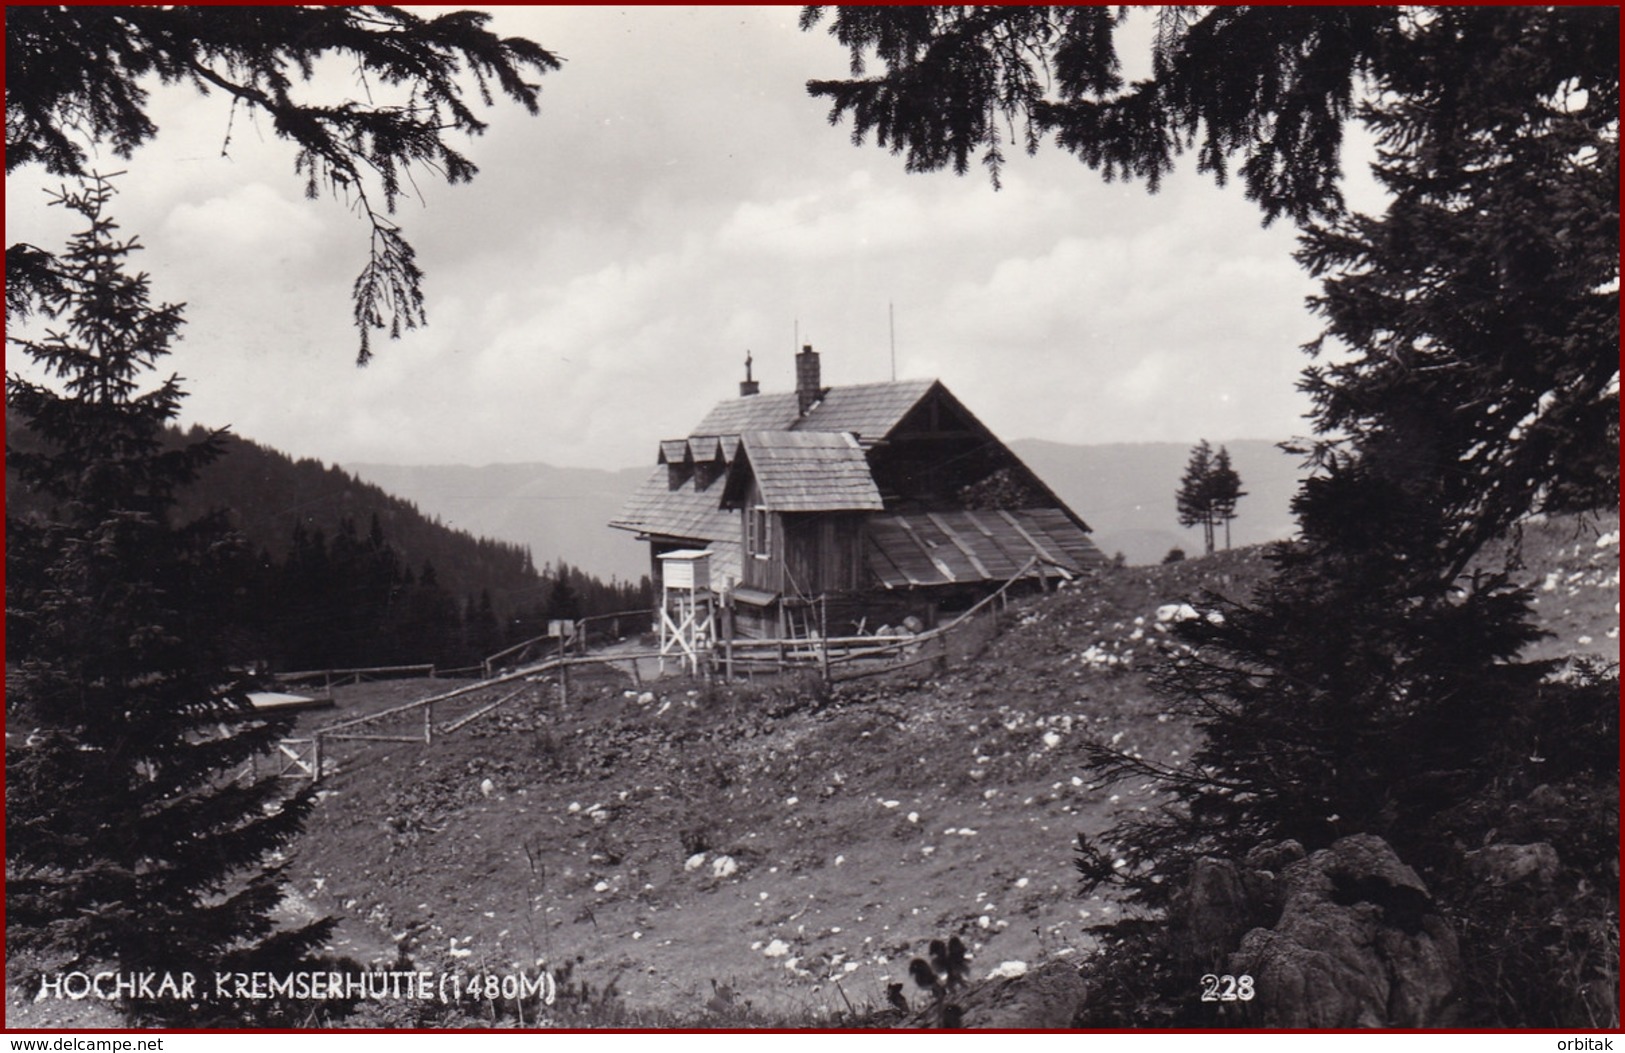 Kremser Hütte (Hochkar Schutzhaus) * Berghütte, Alpen * Österreich * AK2322 - Scheibbs